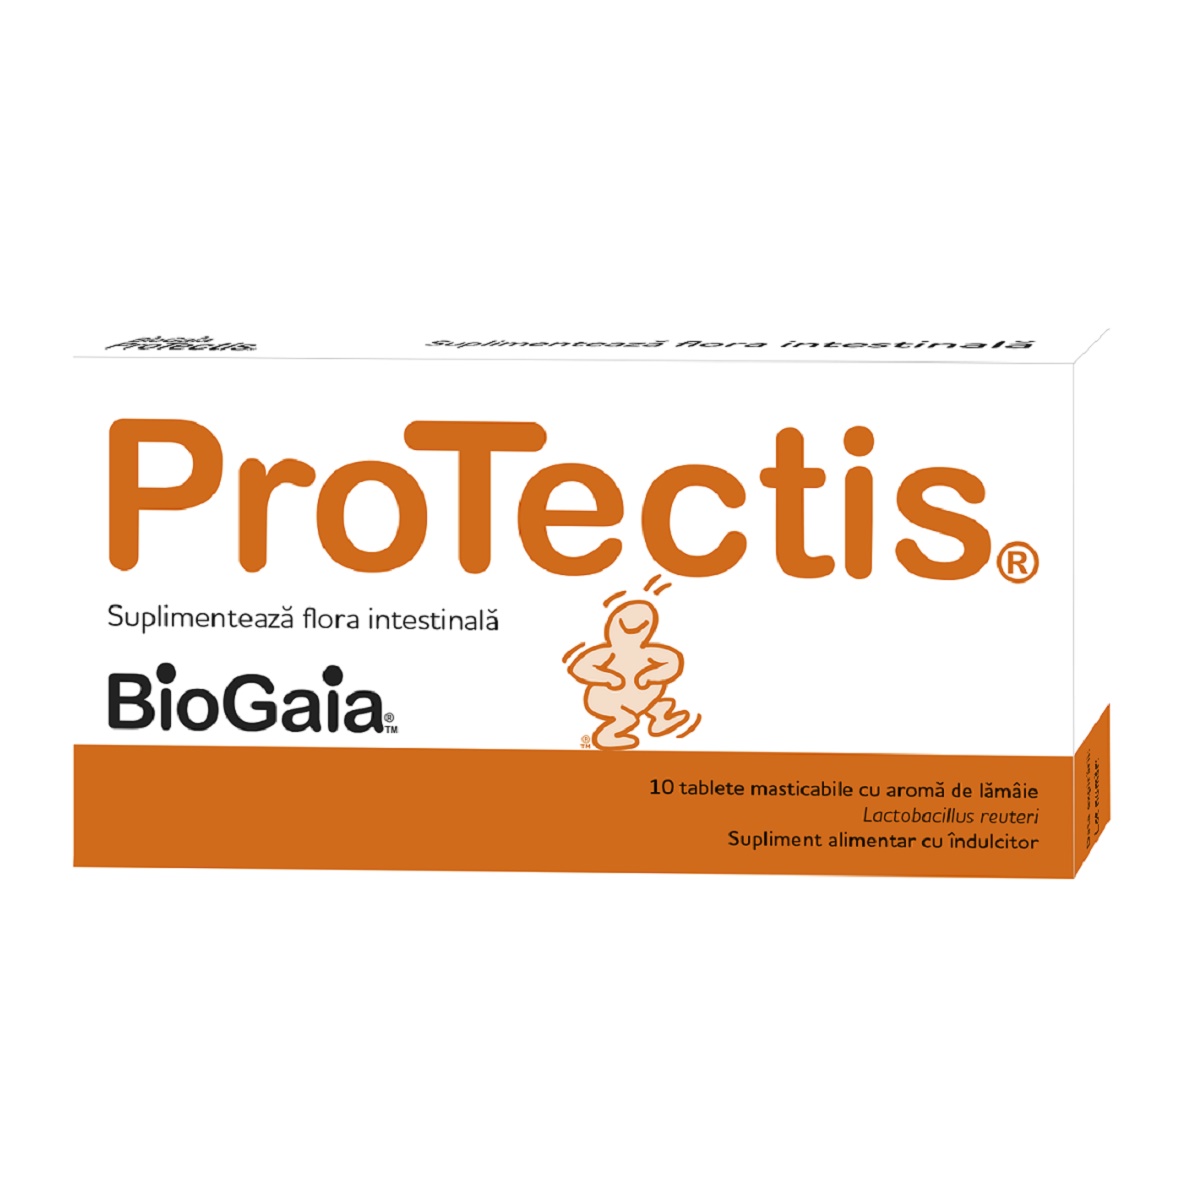 Protectis cu aroma de lamaie, 10 tablete masticabile, BioGaia